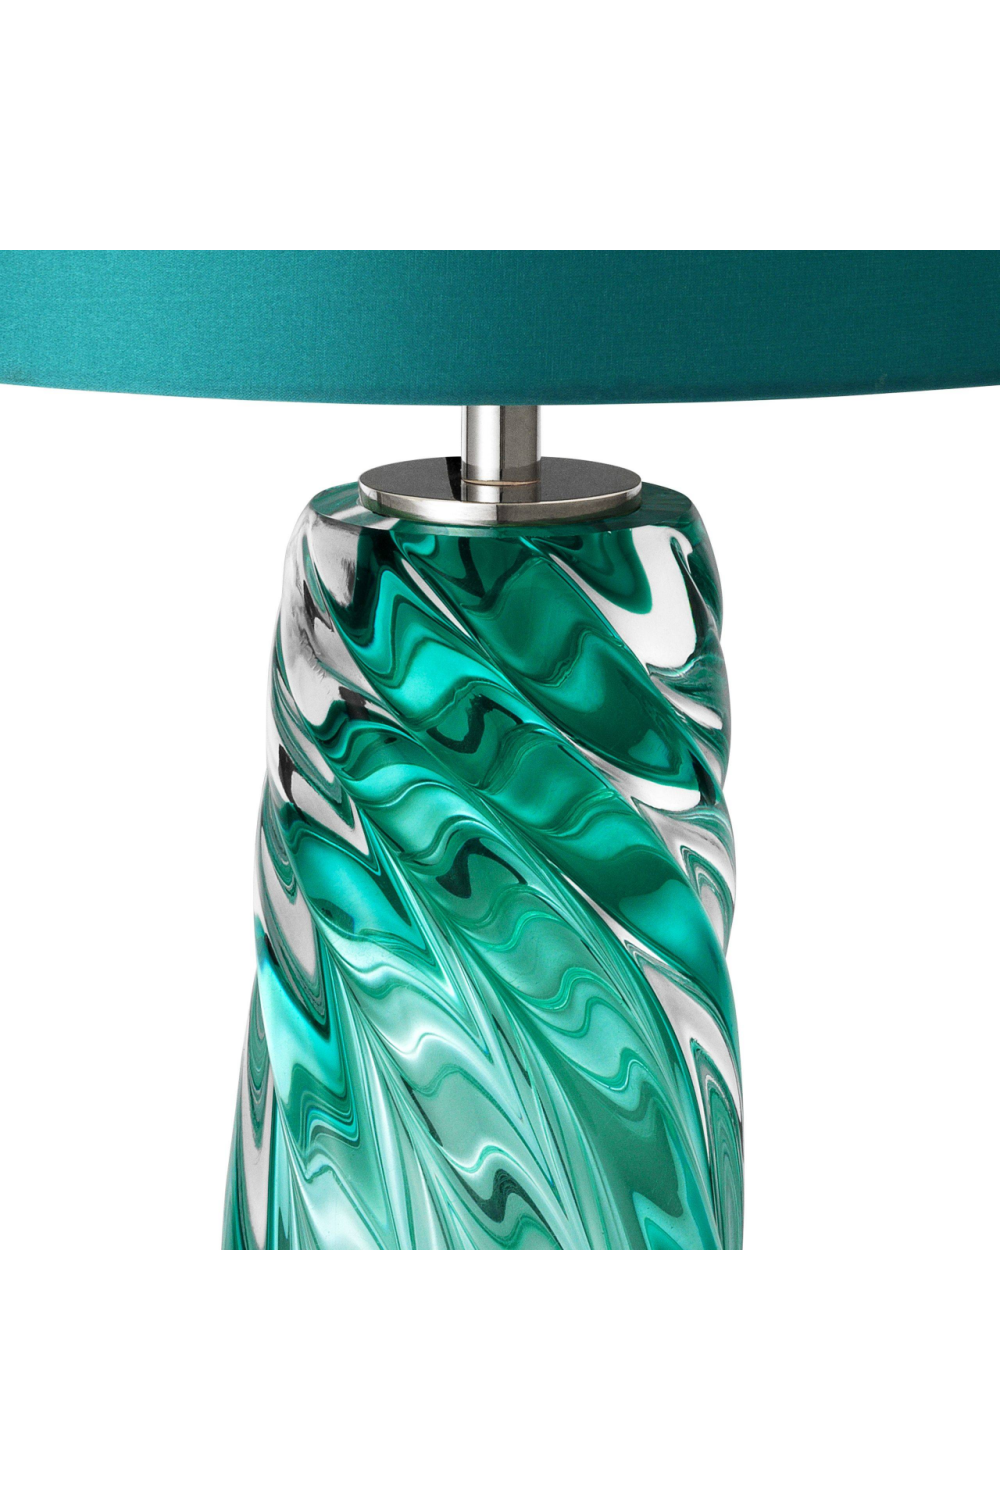 Teal Blown Glass Table Lamp | Eichholtz Barron | OROA